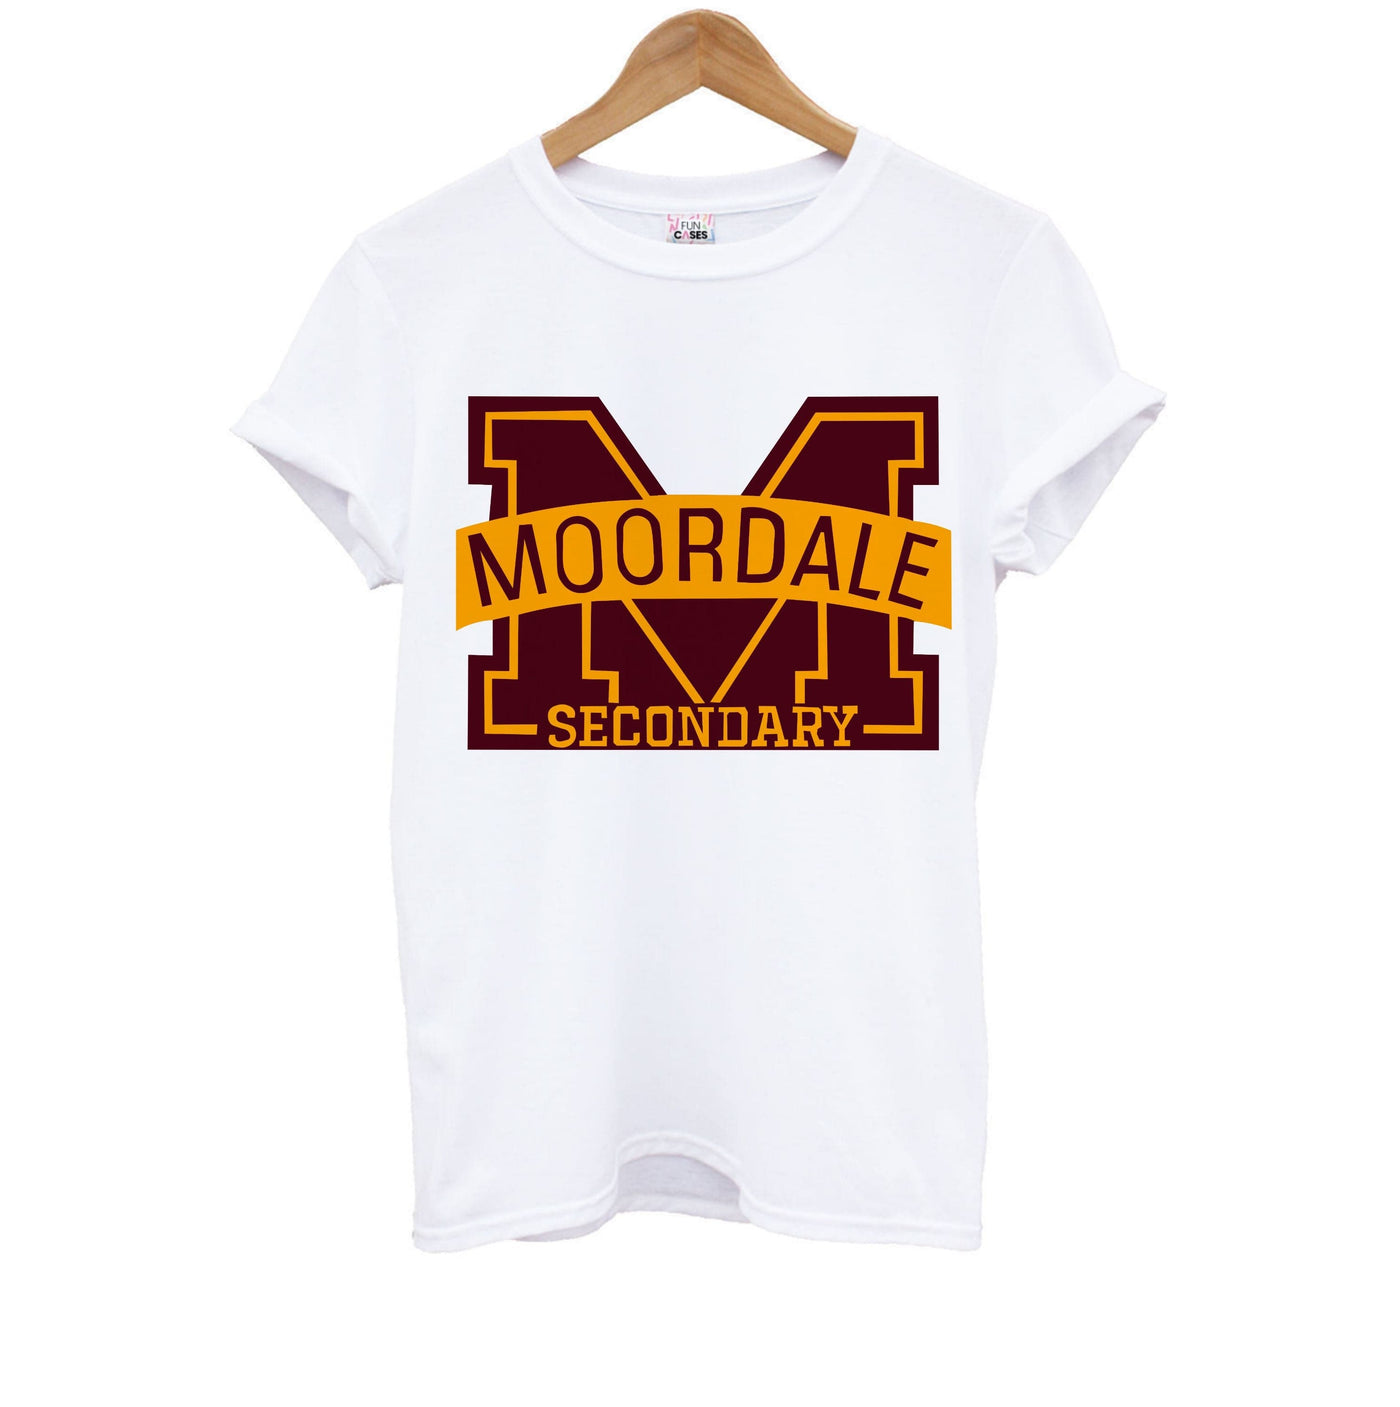 Moordale - Sex Education Kids T-Shirt